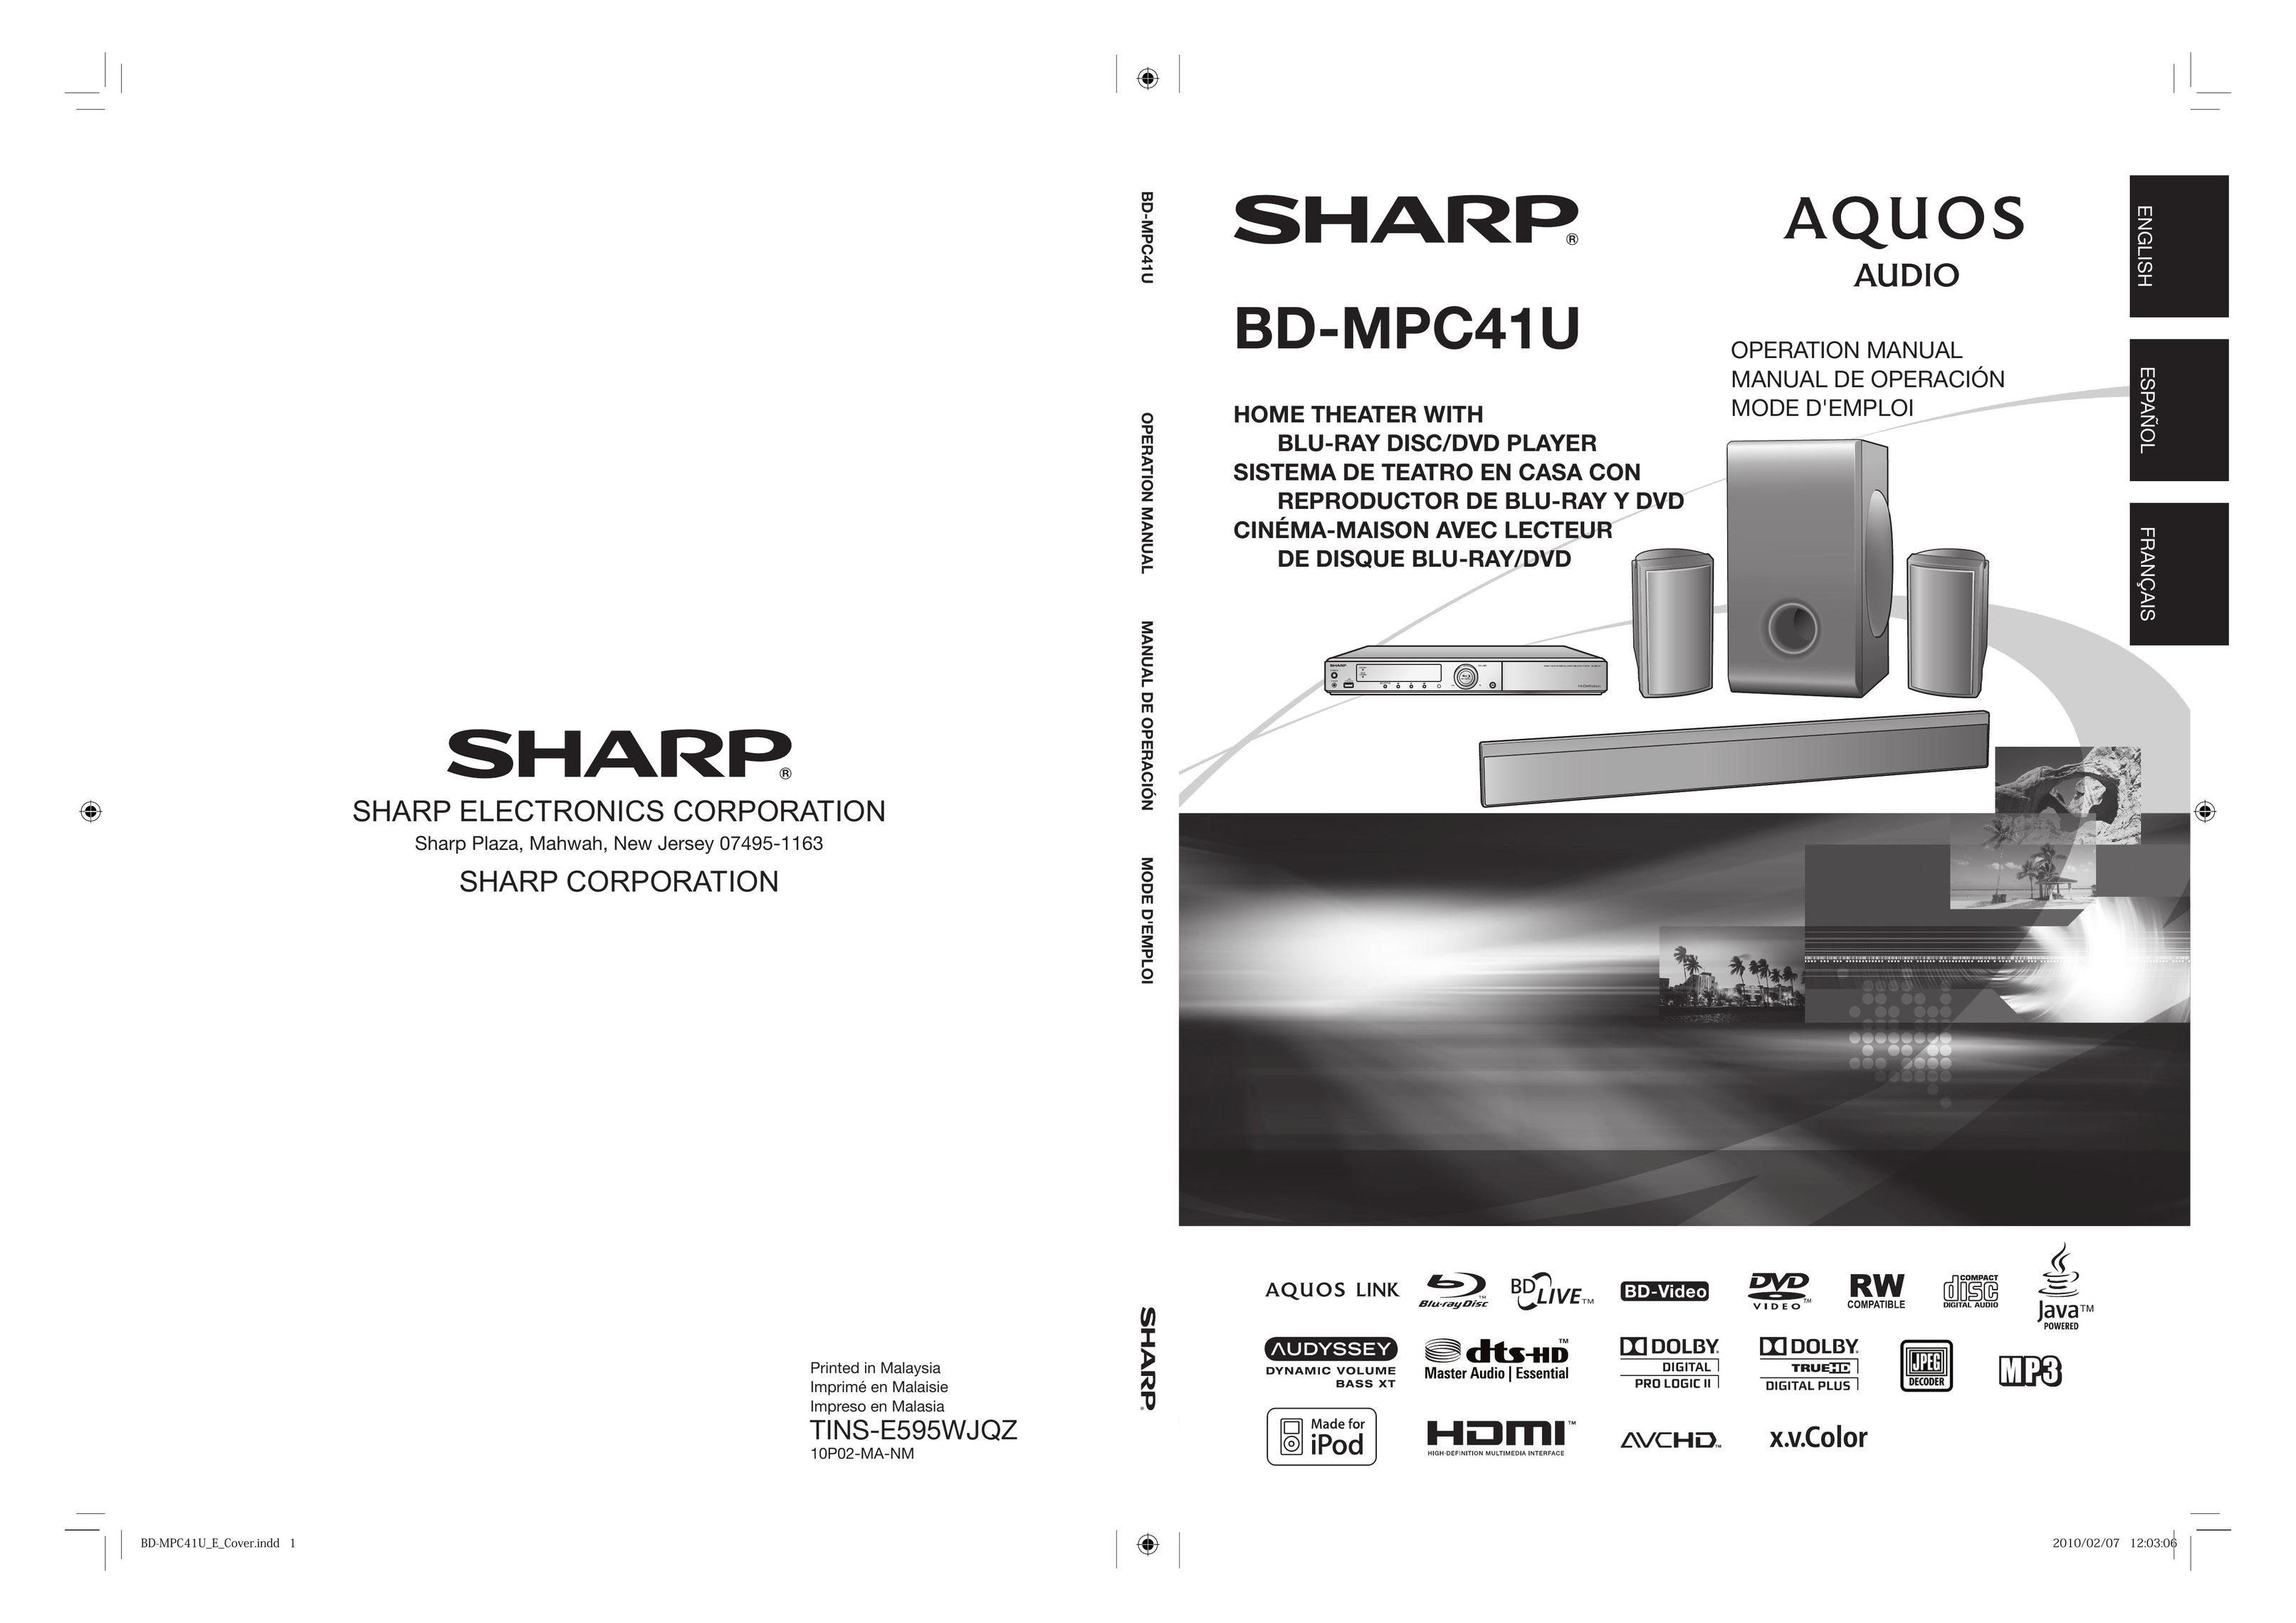 Sharp TINS-E595WJQZ Home Theater System User Manual